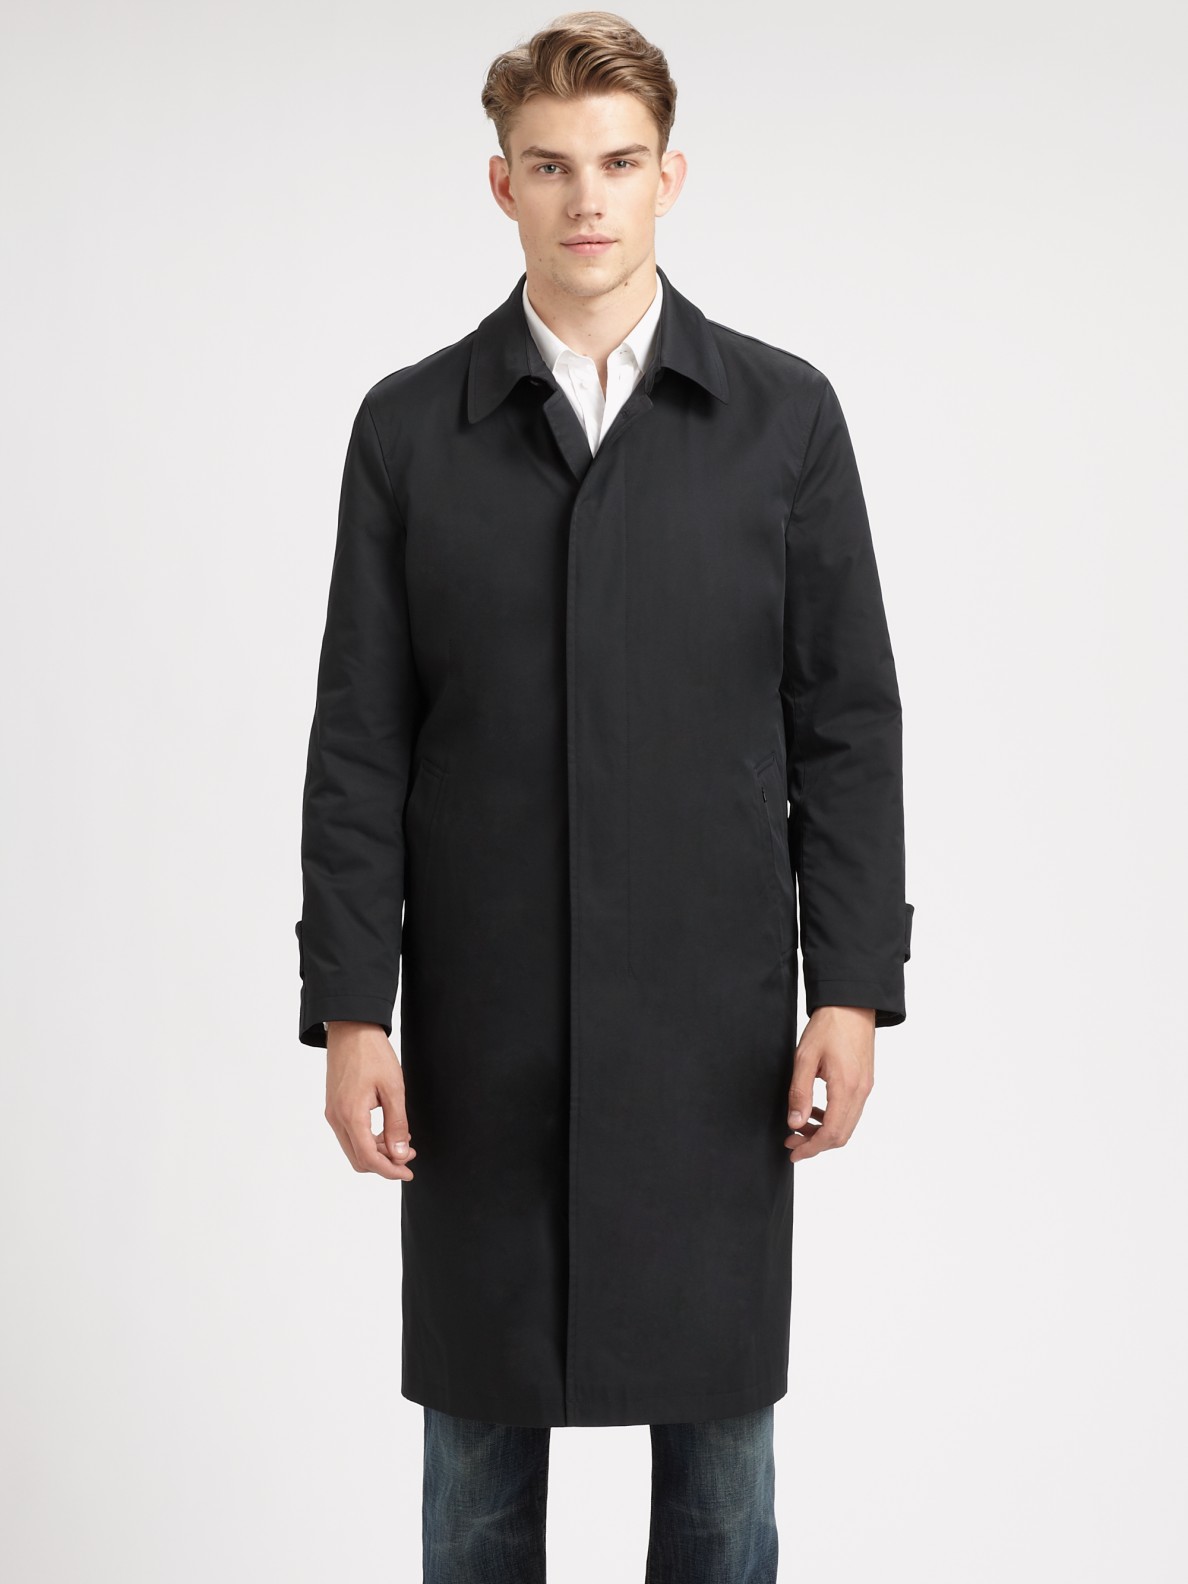 Sanyo Shasta Raglan Coat in Black for Men - Lyst